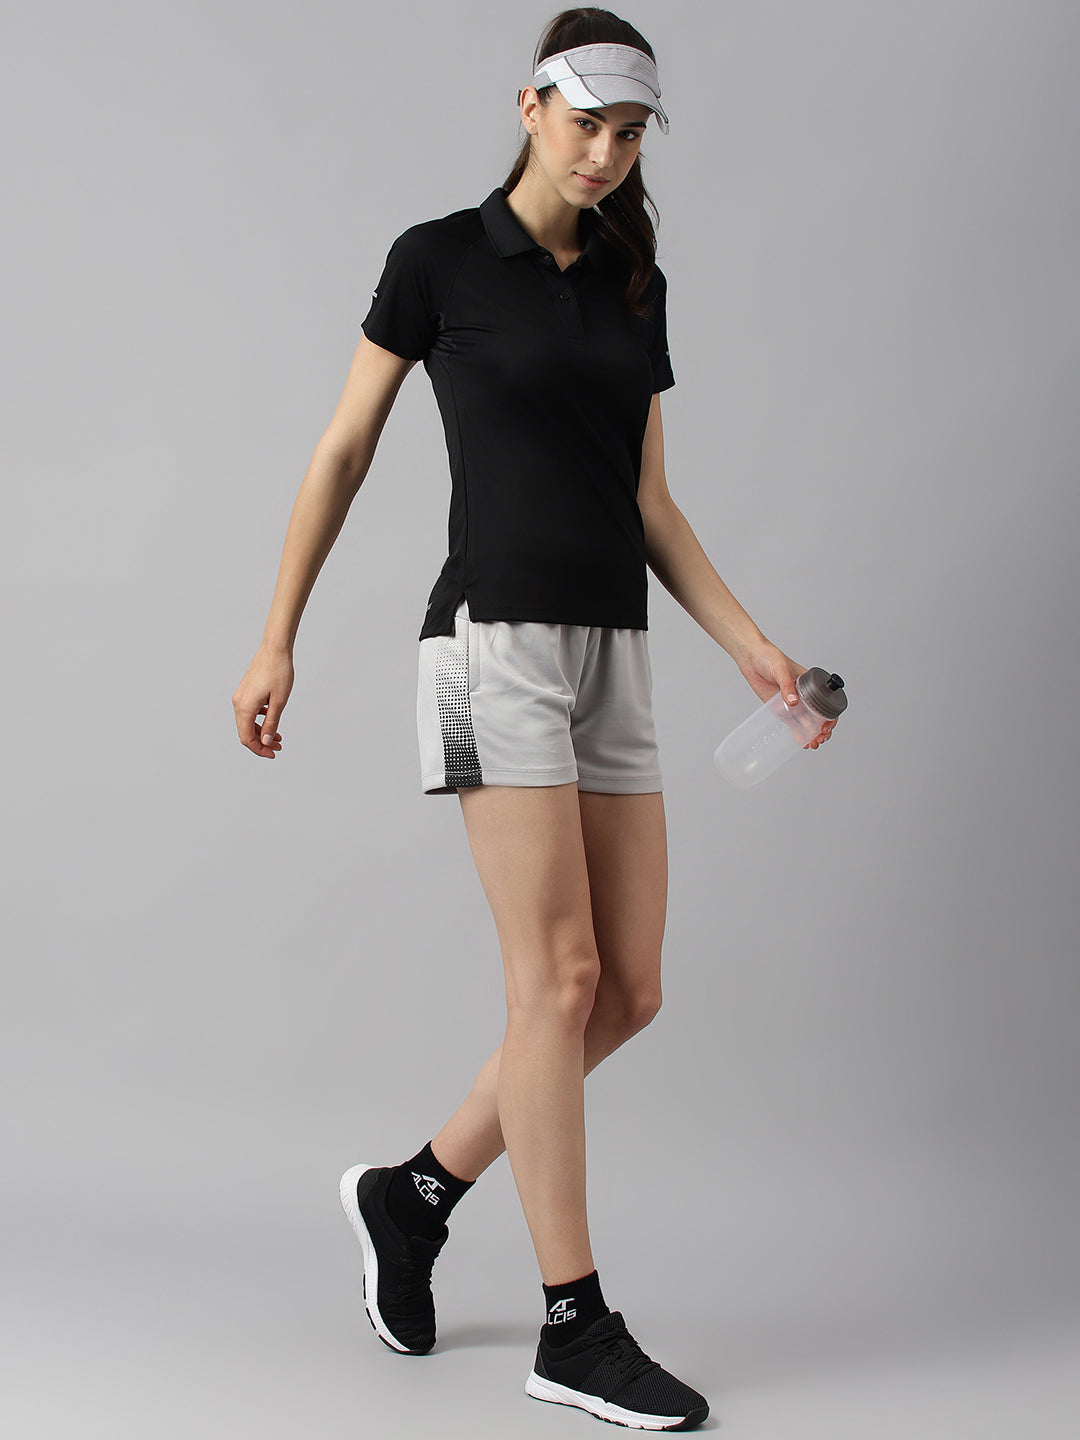 Alcis Women Black Tech-Fit Anti-Static Soft-Touch Slim-Fit Training Polo T-Shirt